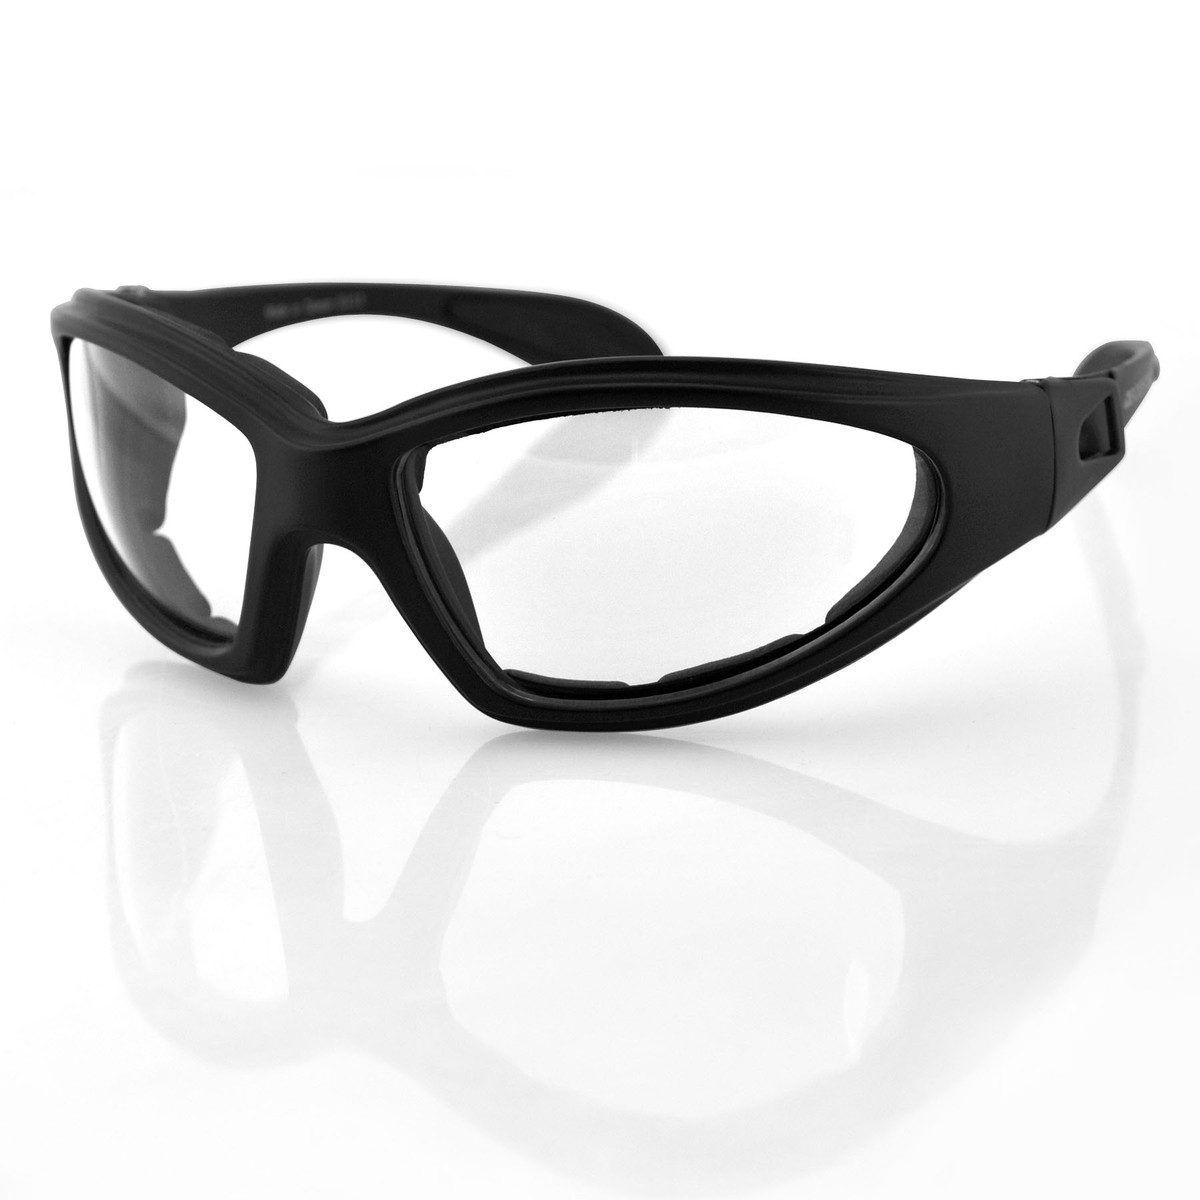 Bobster GXR Shatter Resistant Sunglasses that Float - Clear